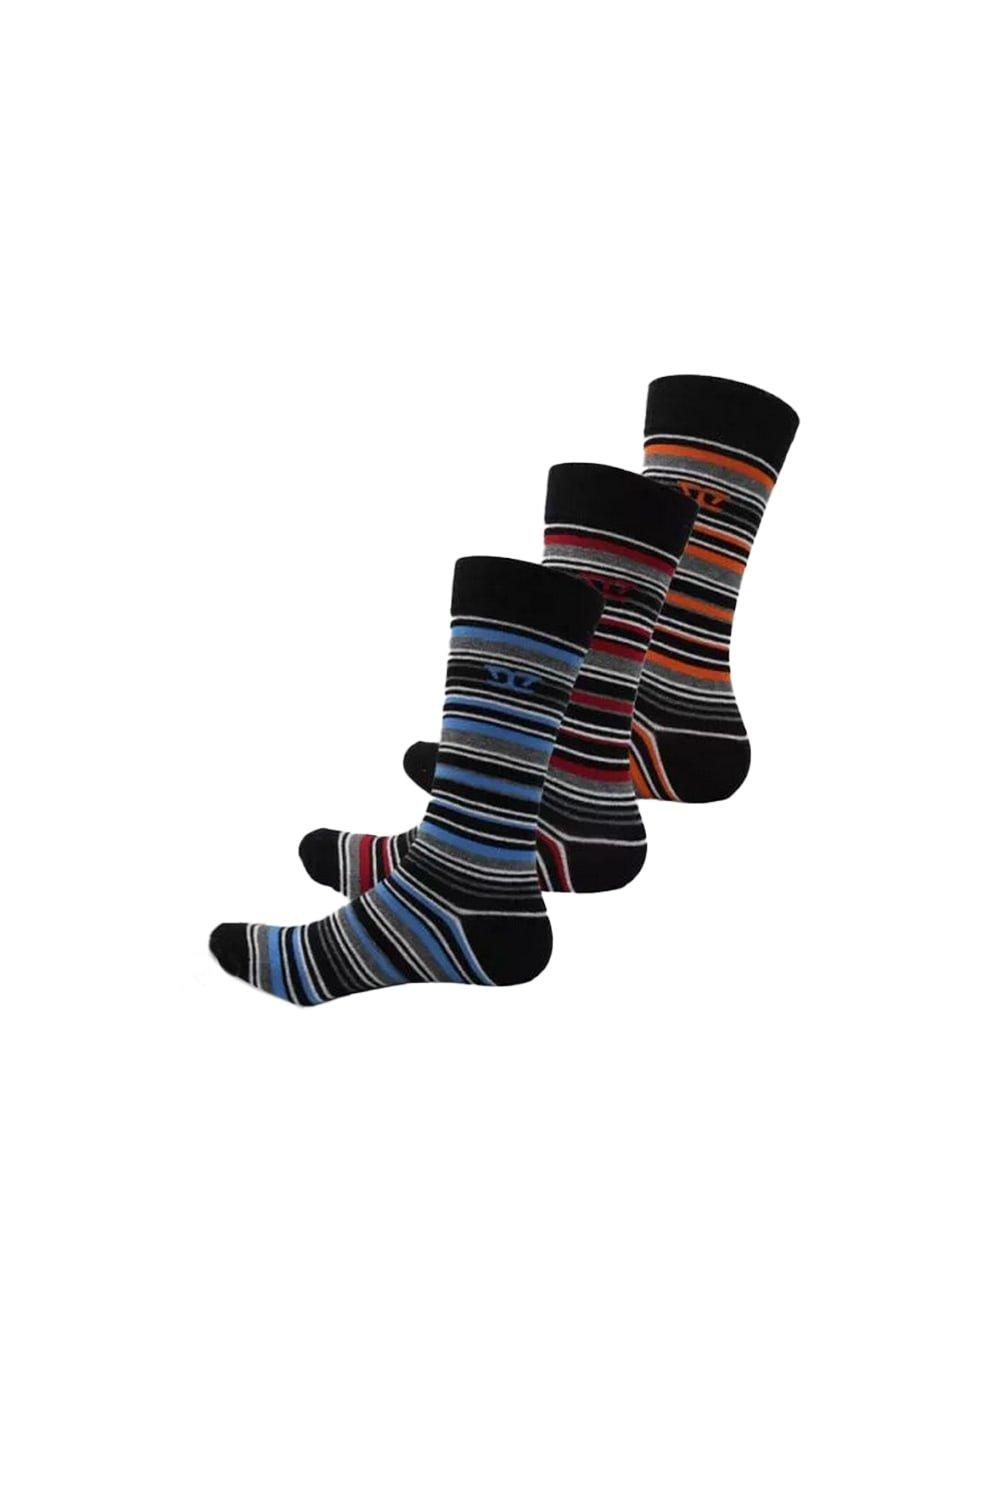 Roxton D555 Striped Cotton Kingsize Ankle Socks (Pack of 3)